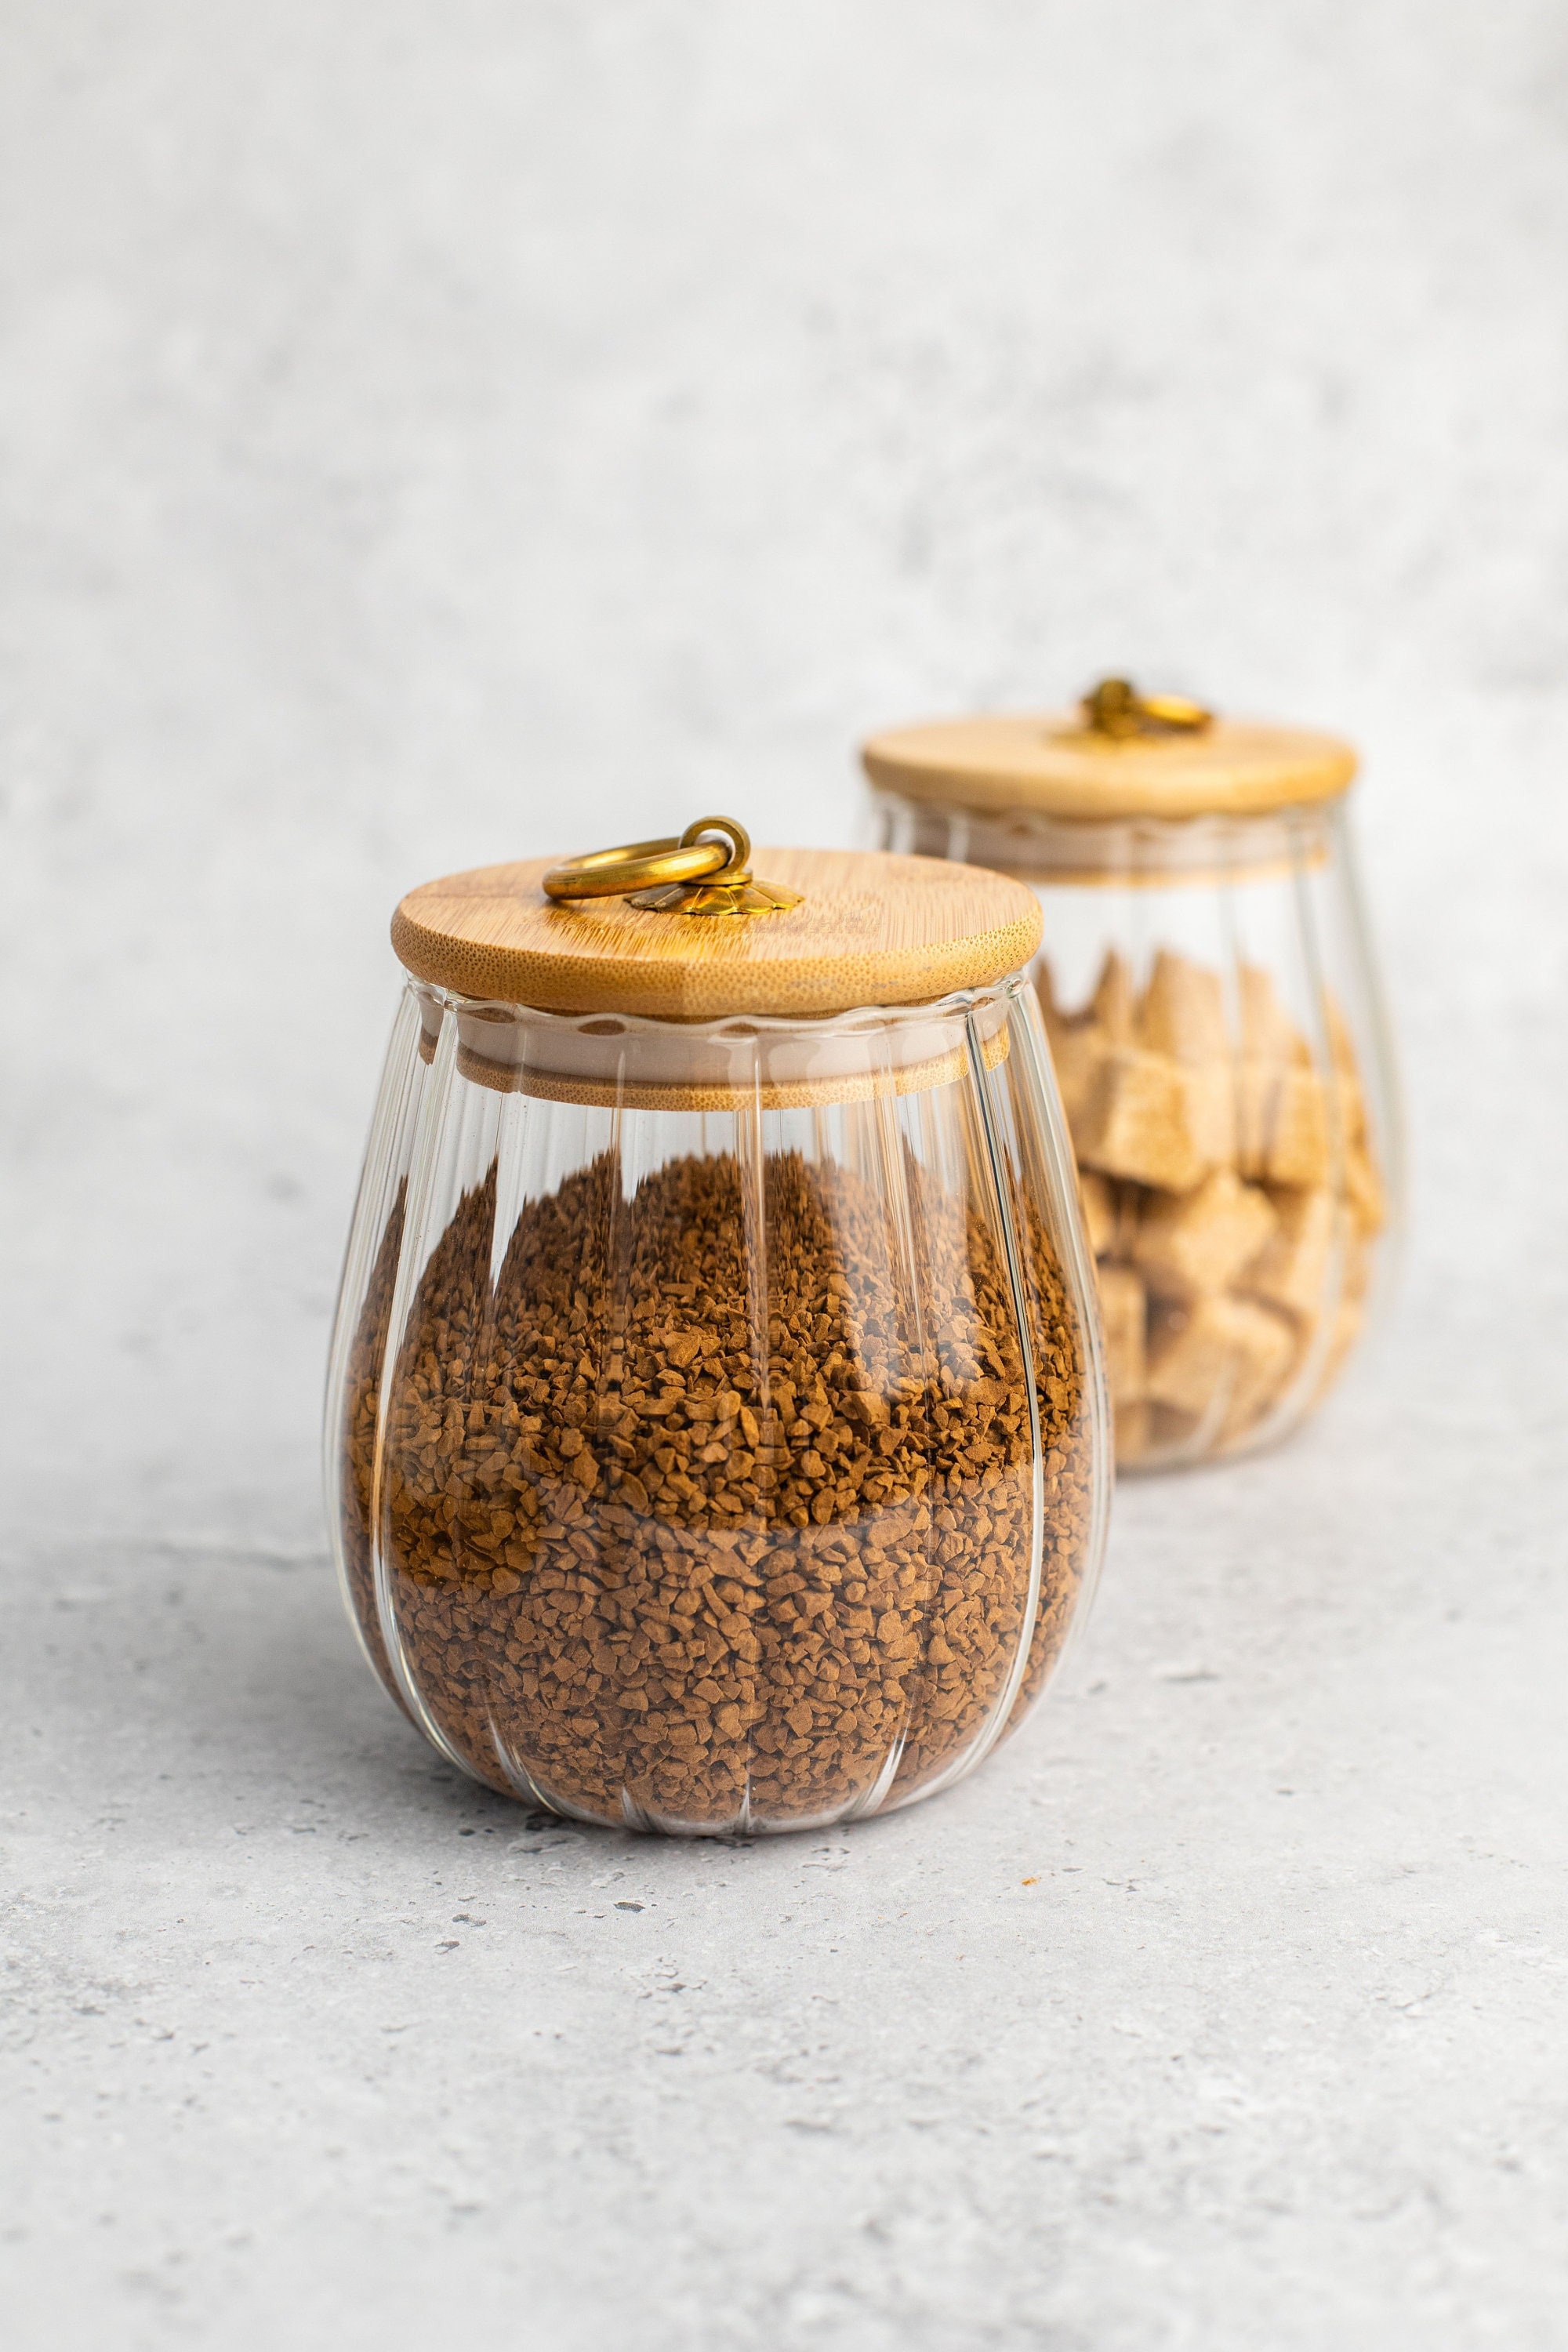 HIMAYA Glass Spice Jars With Natural Acacia Wood Lids Size 160ml